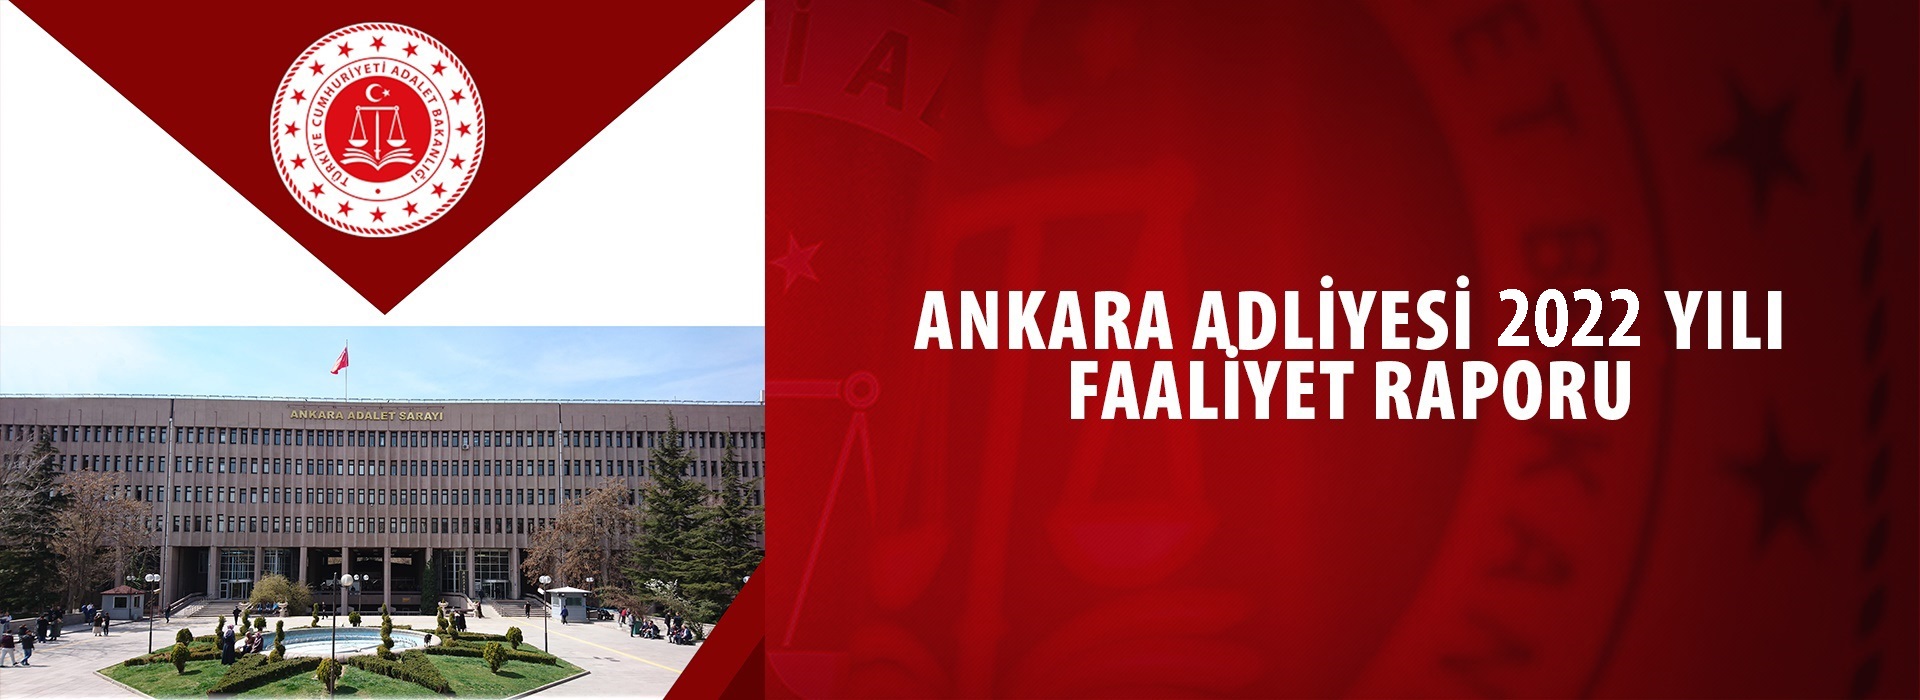 Ankara Adliyesi 2022 Yılı Faaliyet Raporu